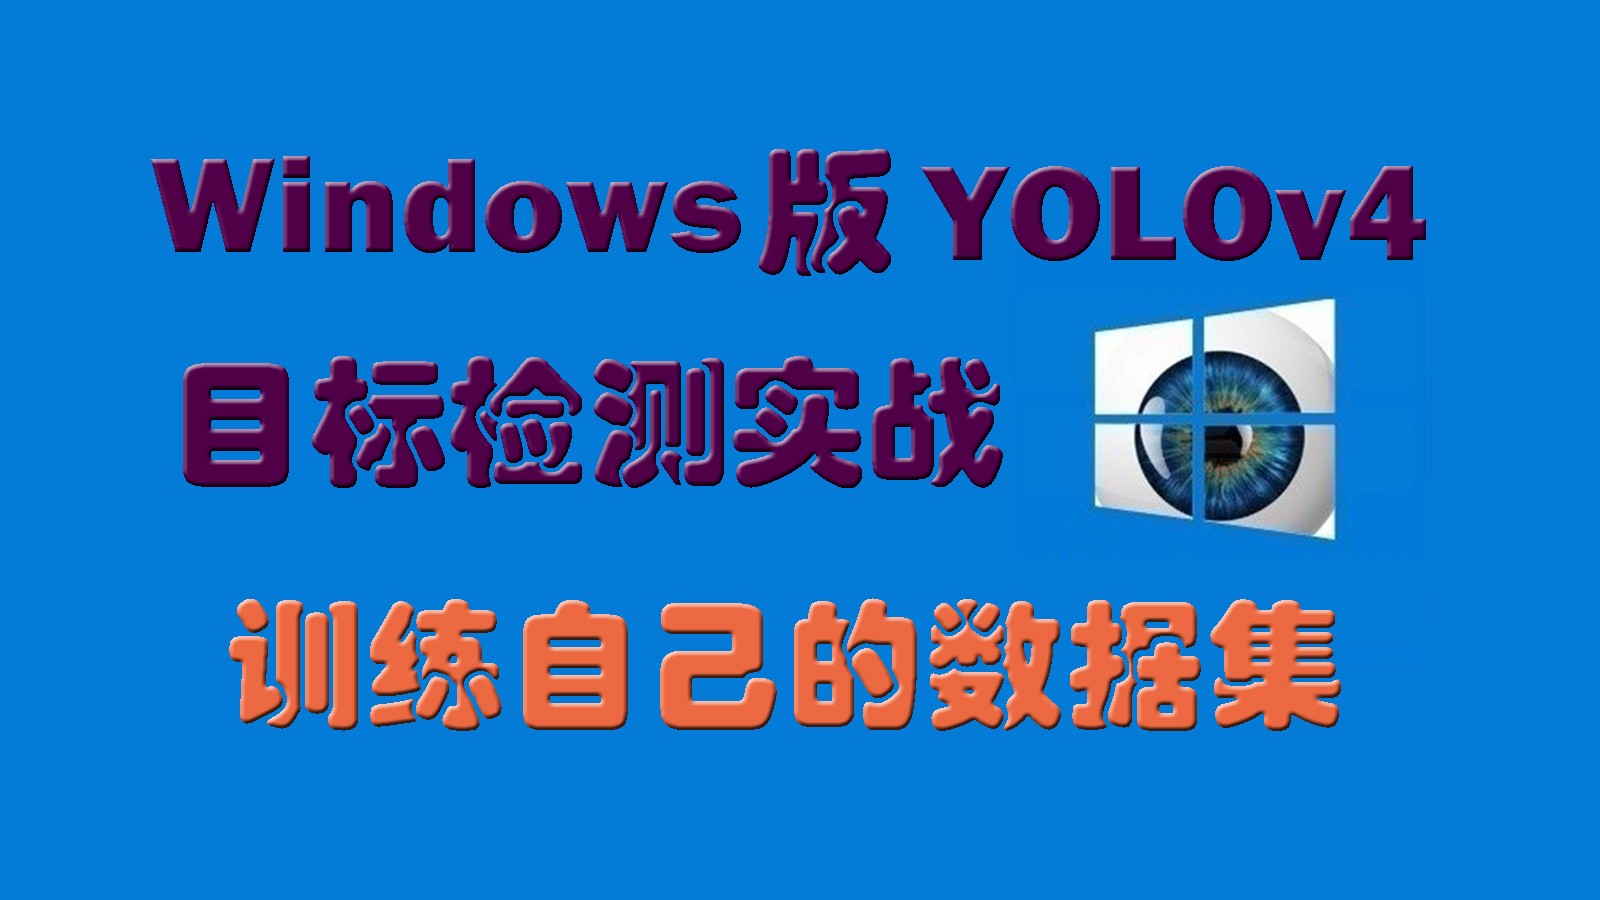  YOLOv4 target detection for Windows: training your own data set